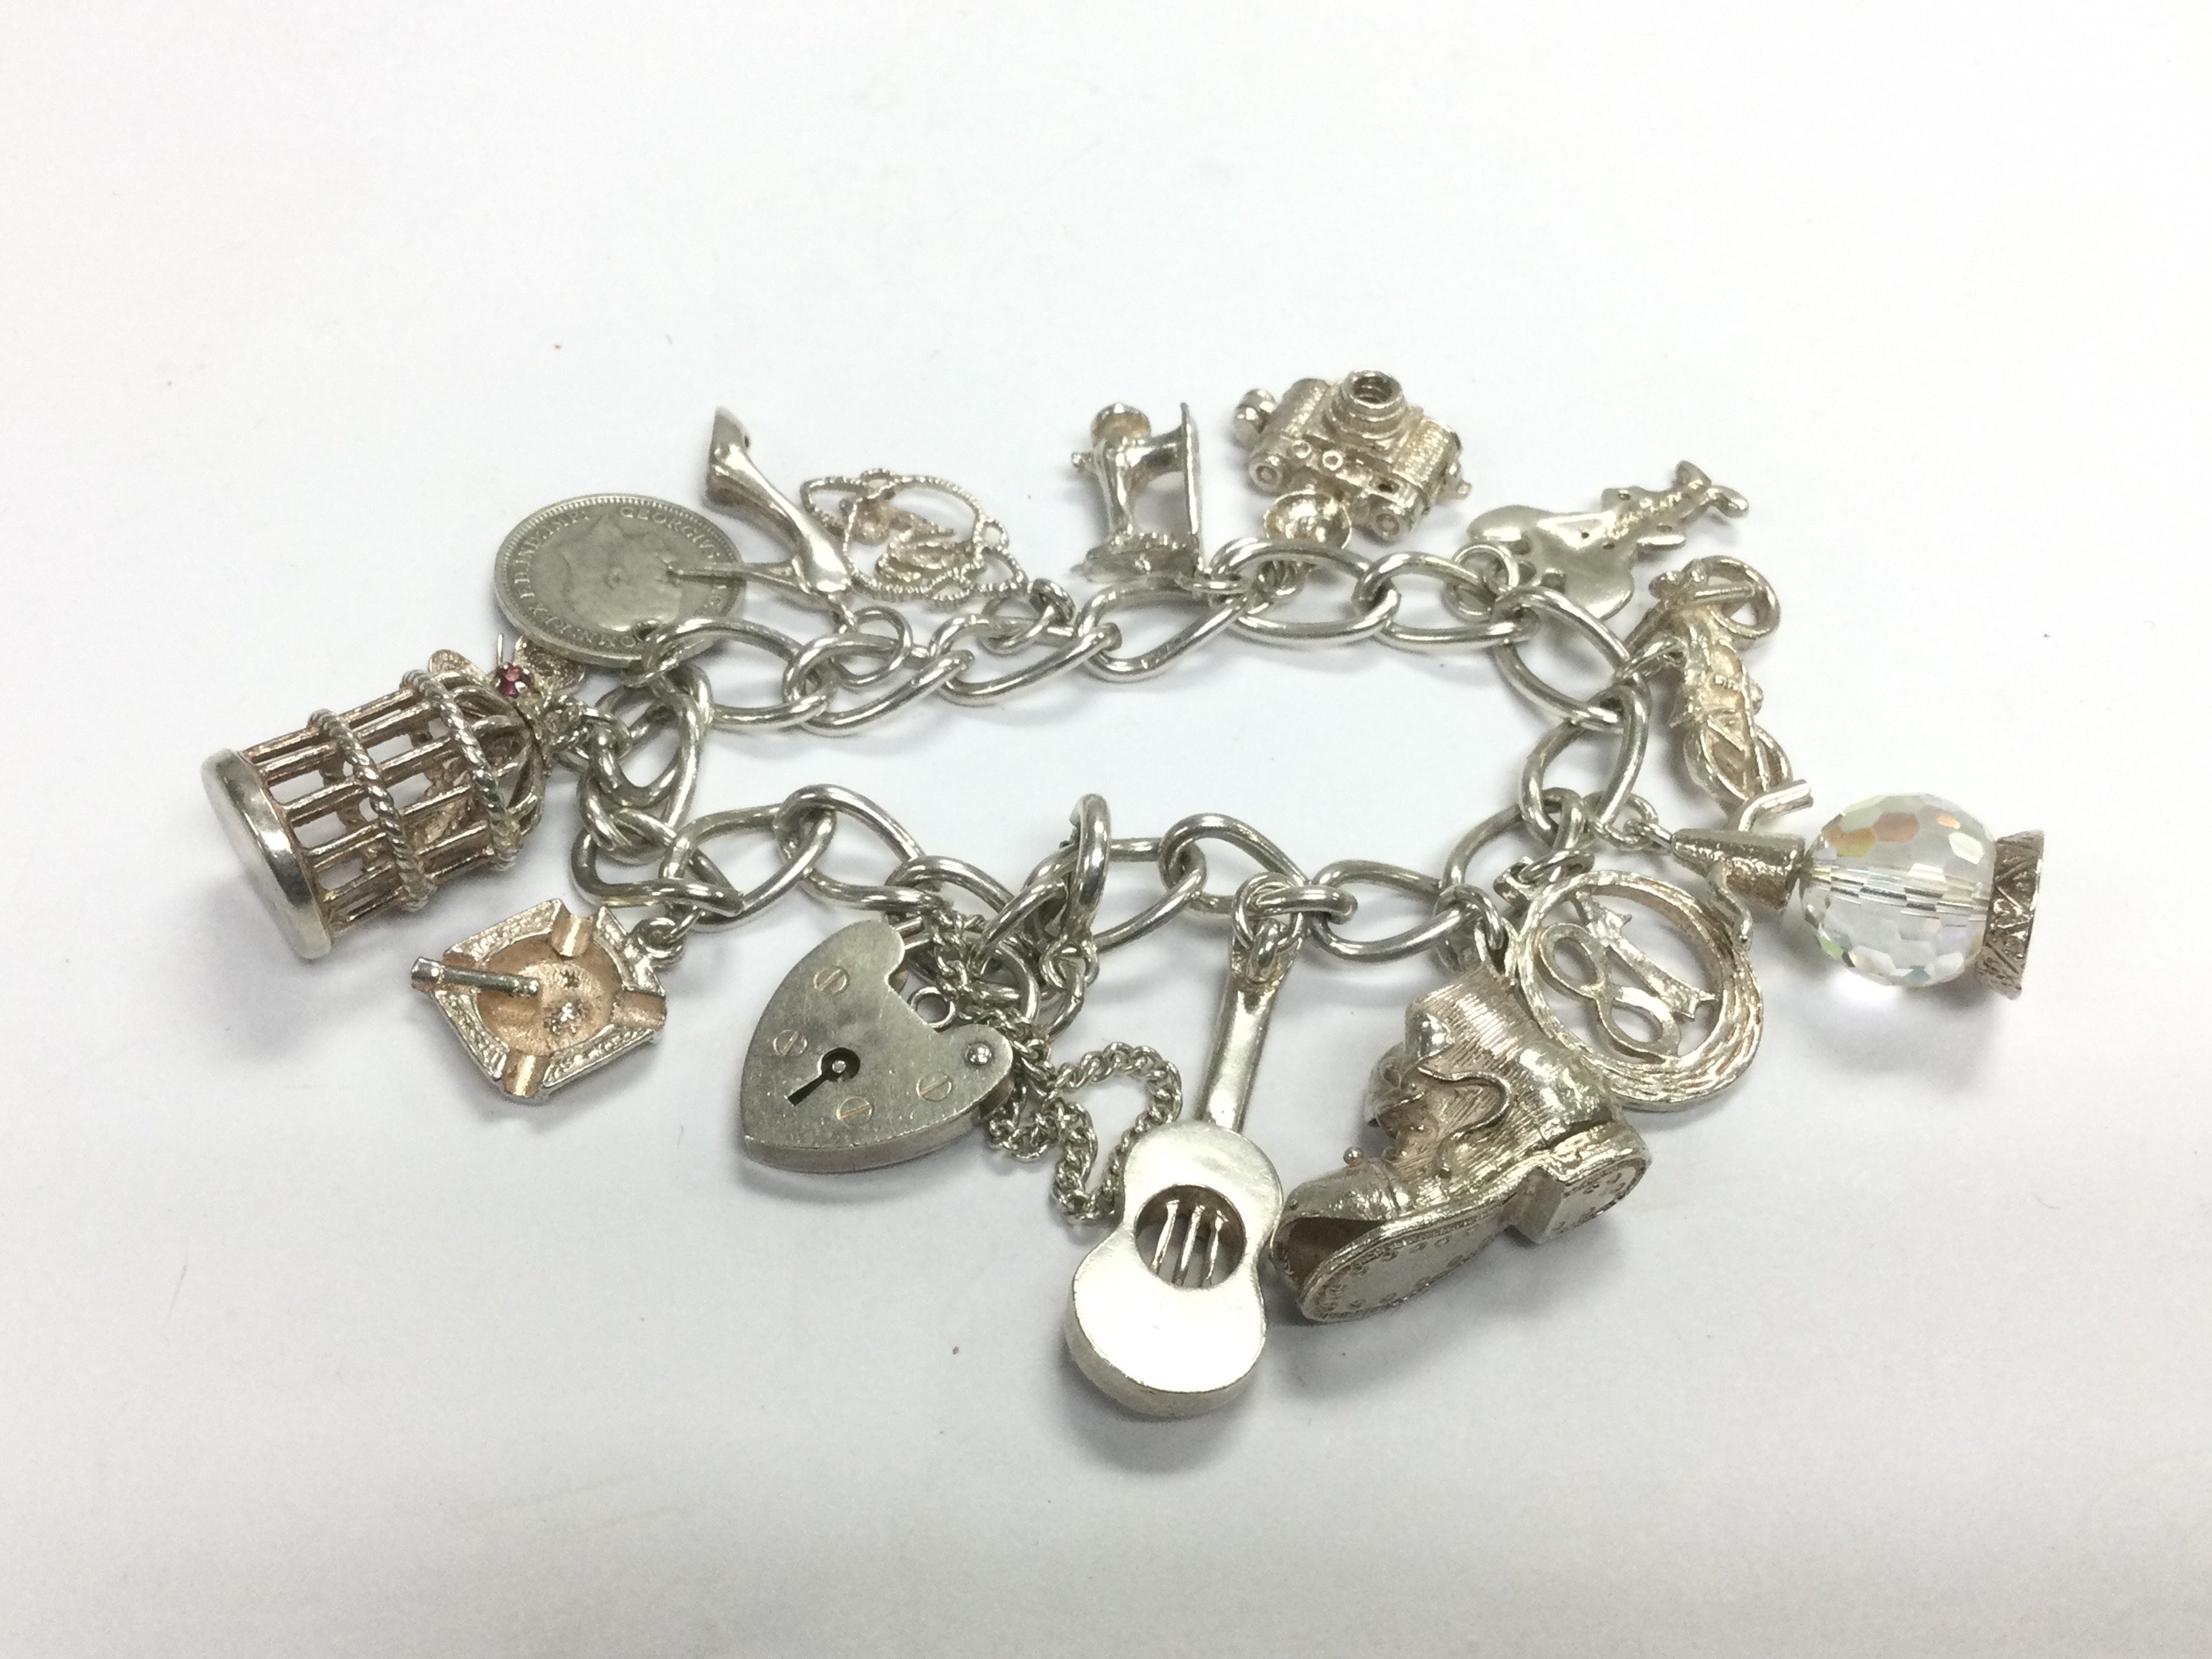 A silver charm bracelet. Shipping category A. NO R